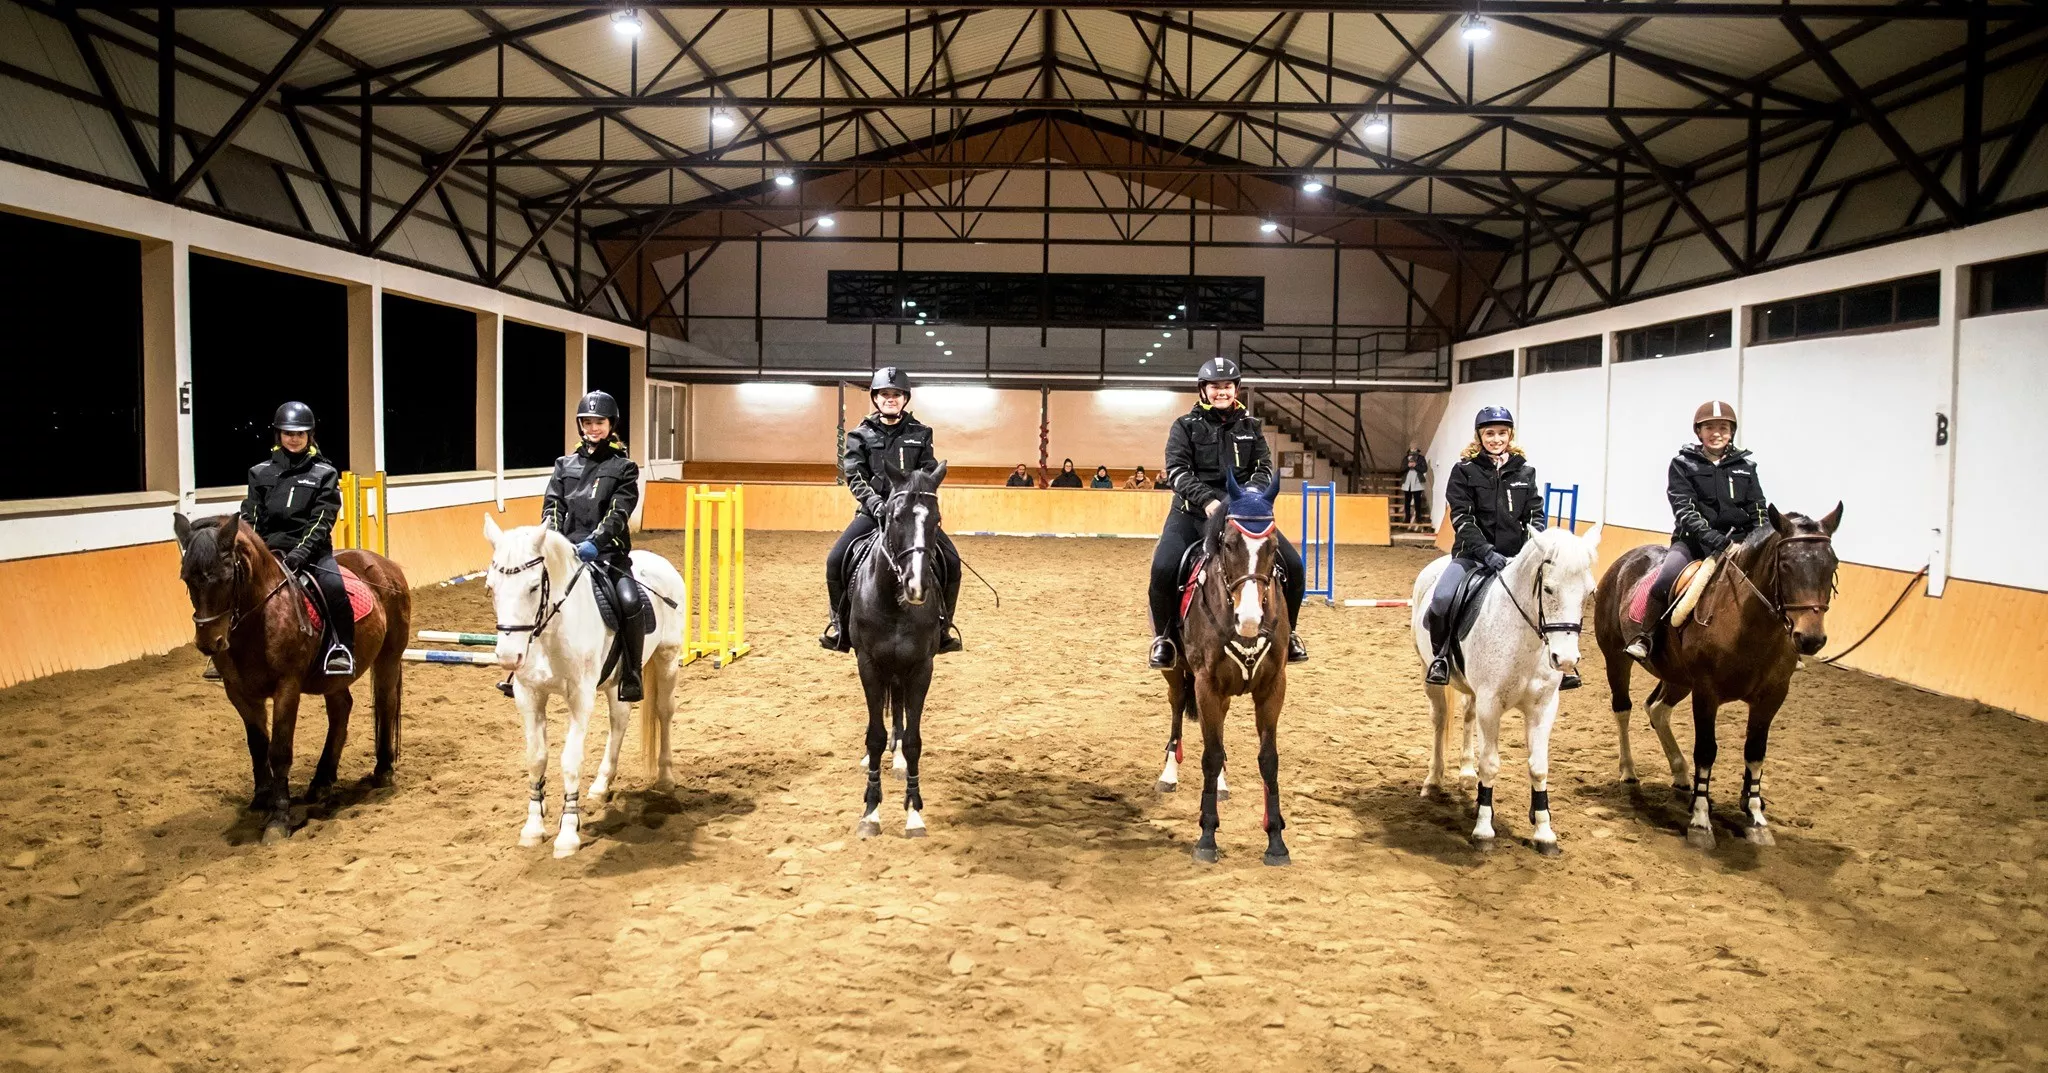 Fondacija Zemlja Prijateljstva I Mira in Bosnia and Herzegovina, Europe | Horseback Riding - Rated 1